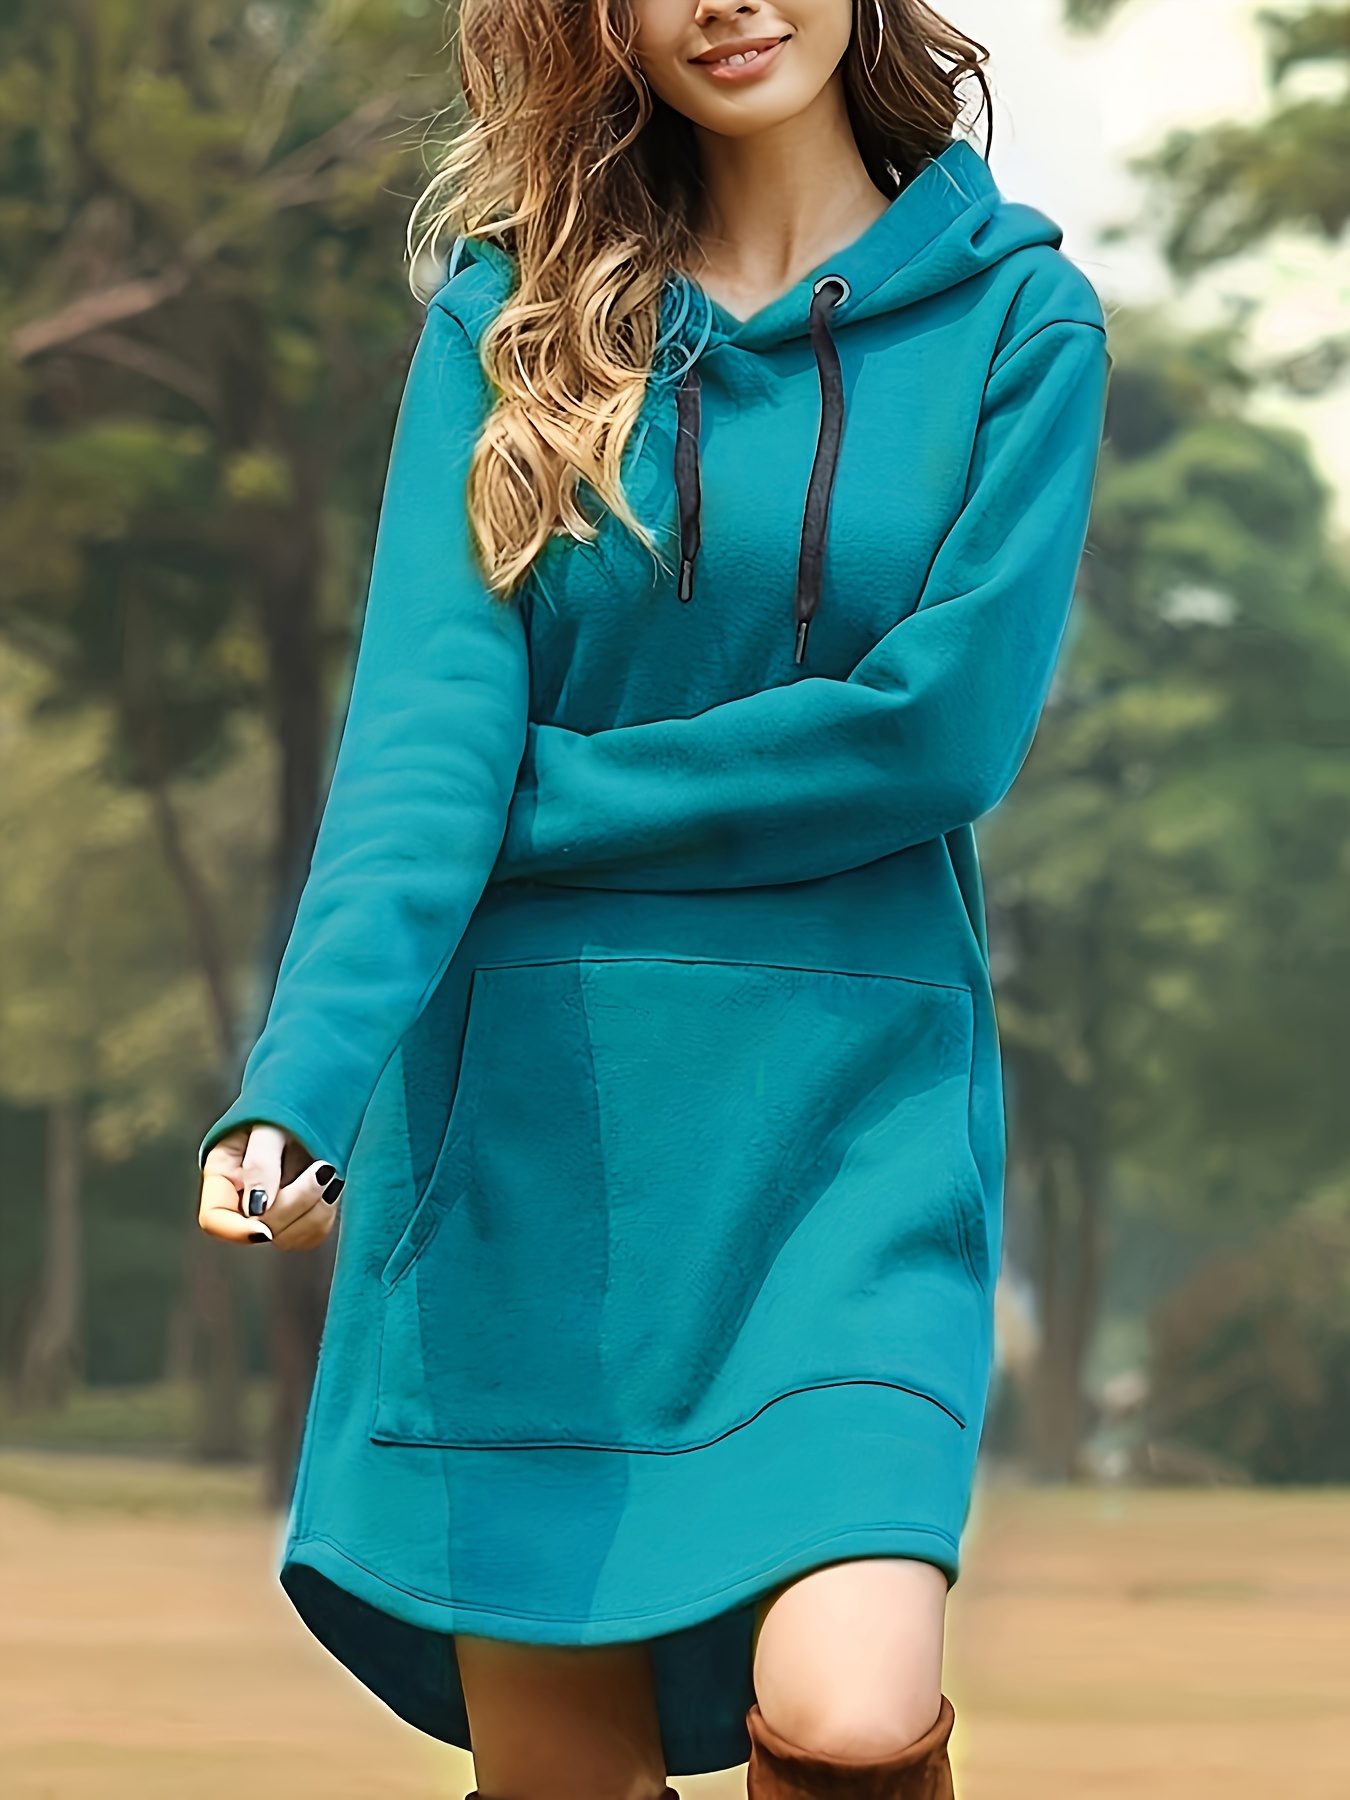 Fleece Dress with Hood & Fancy Details for Girls - green, Girls